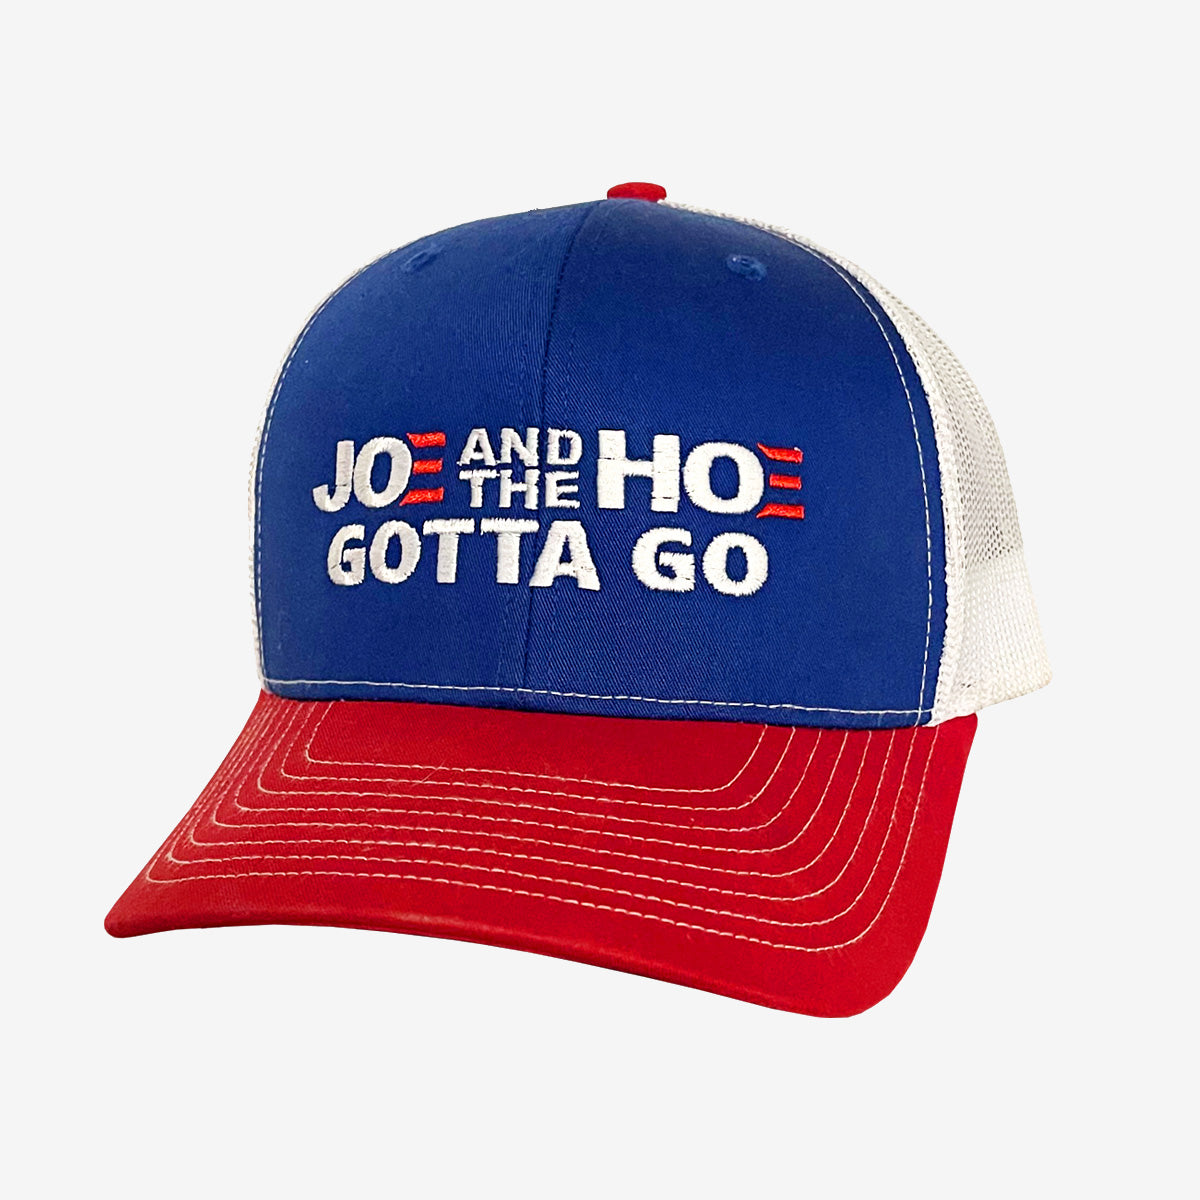 Joe and the Ho Gotta Go Red White Blue Trucker Hat